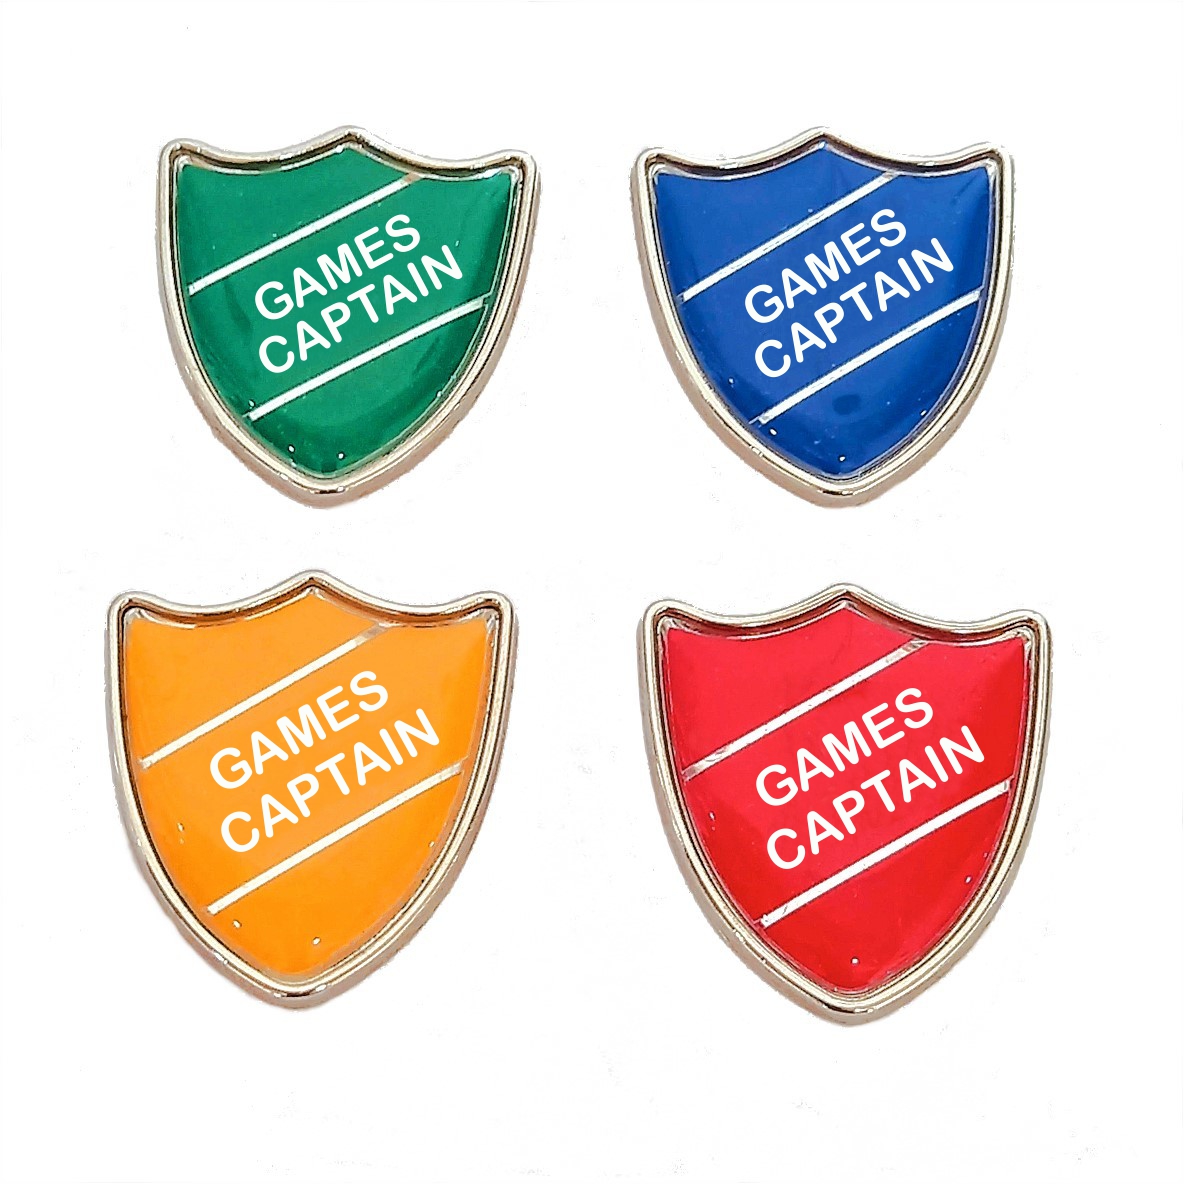 GAMES CAPTAIN shield badge